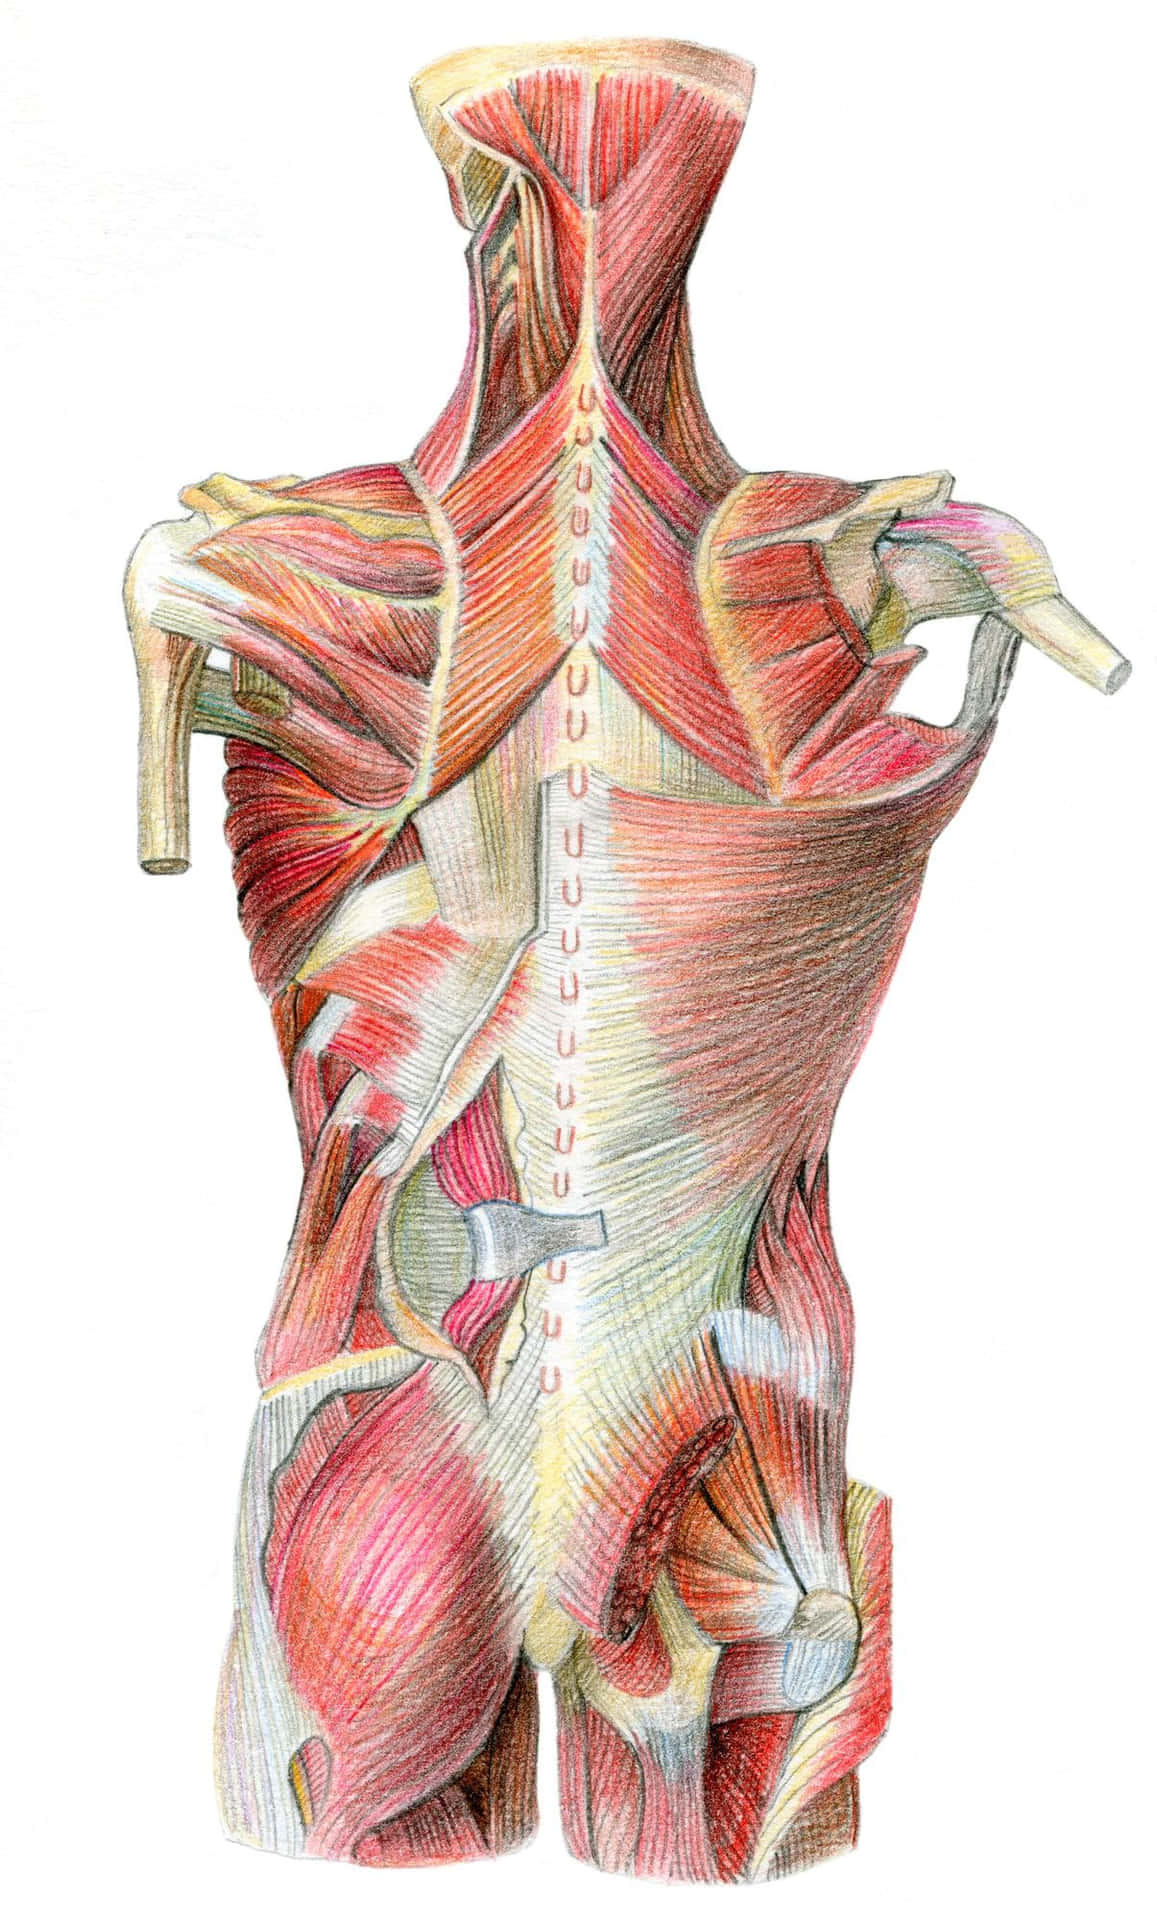 Detailed Human Anatomy Illustration